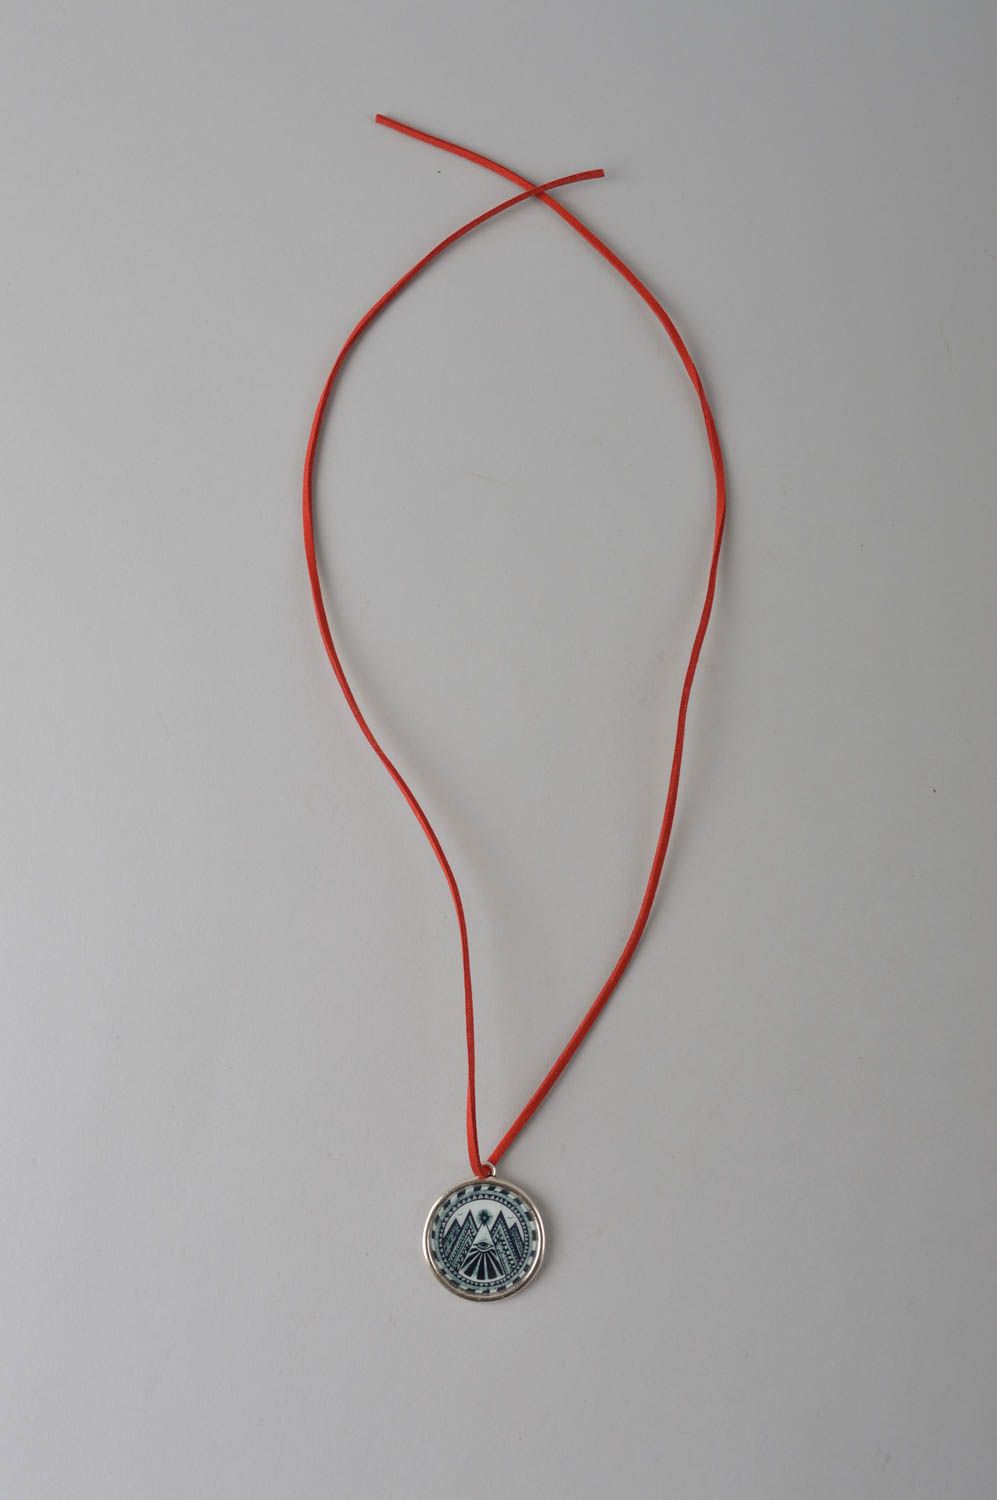 Handmade metal pendant designer metal jewelry for women stylish accessories photo 4